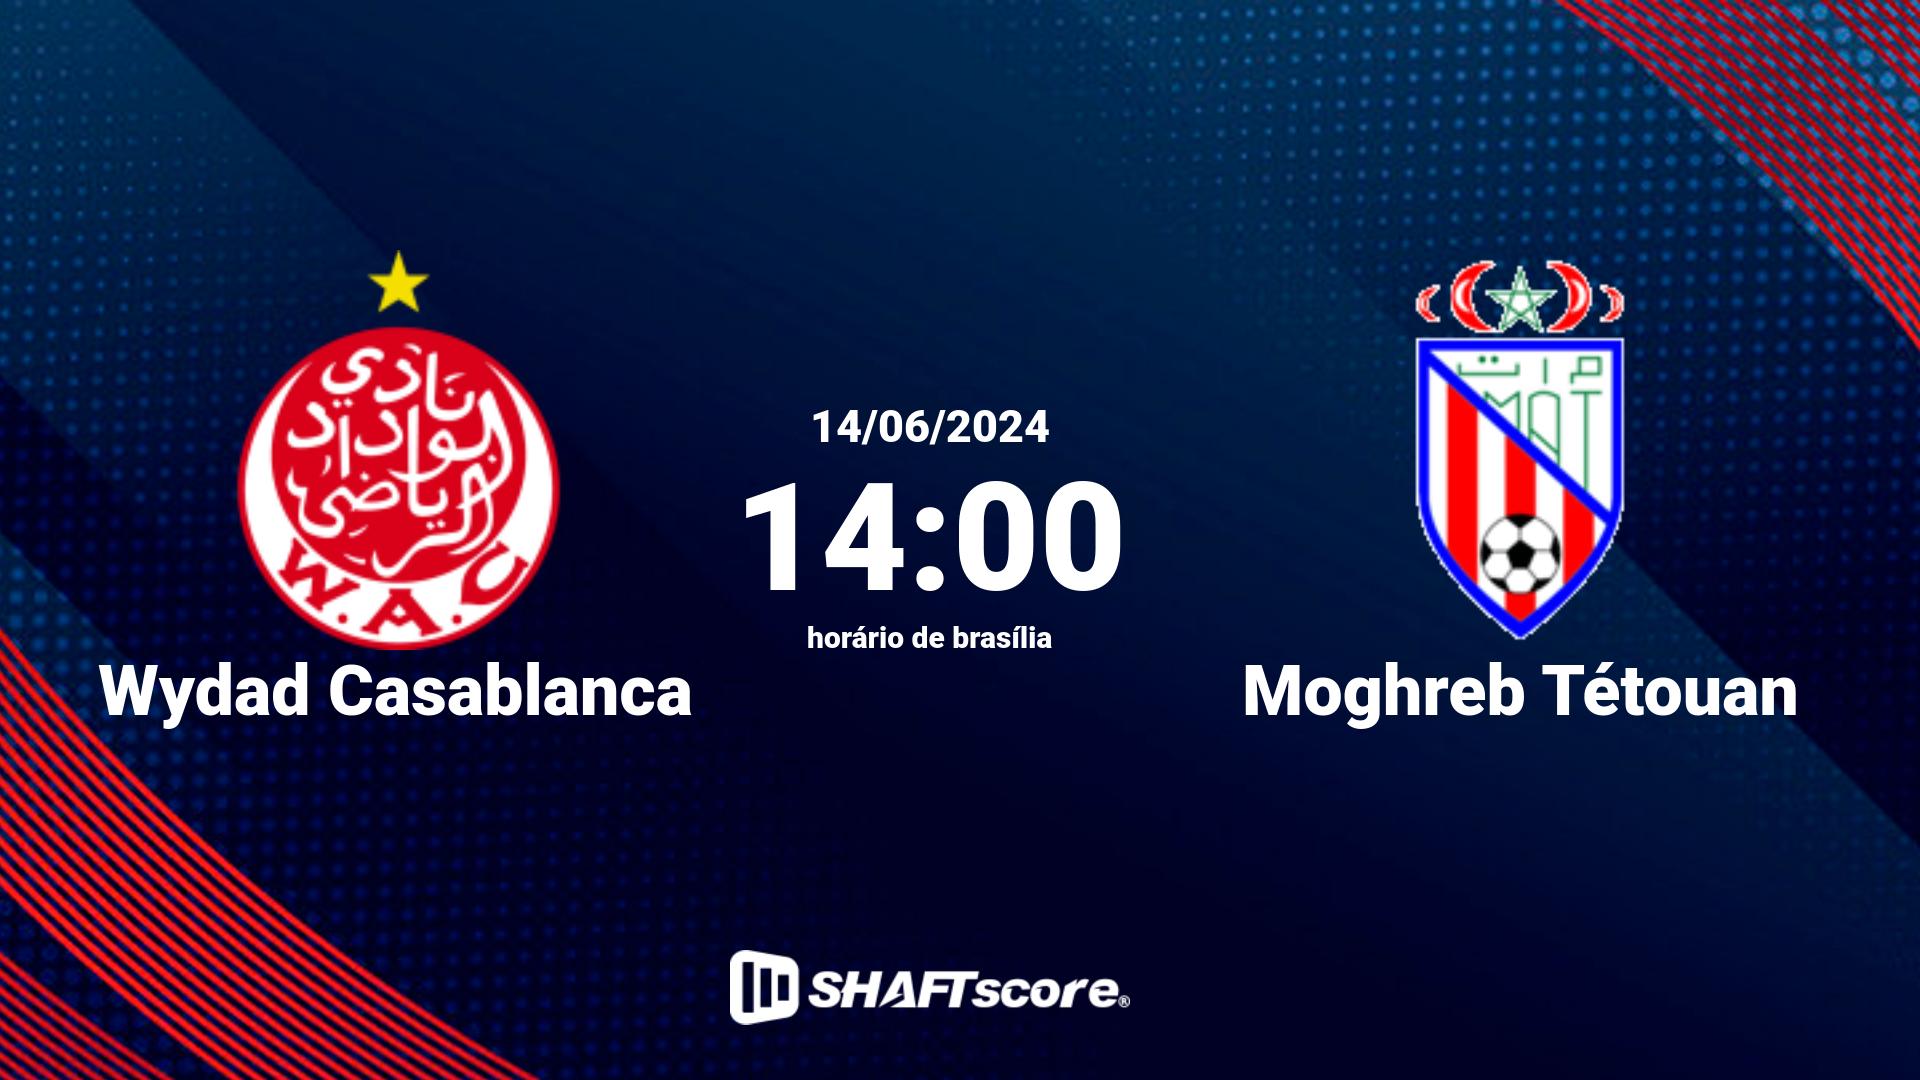 Estatísticas do jogo Wydad Casablanca vs Moghreb Tétouan 14.06 14:00